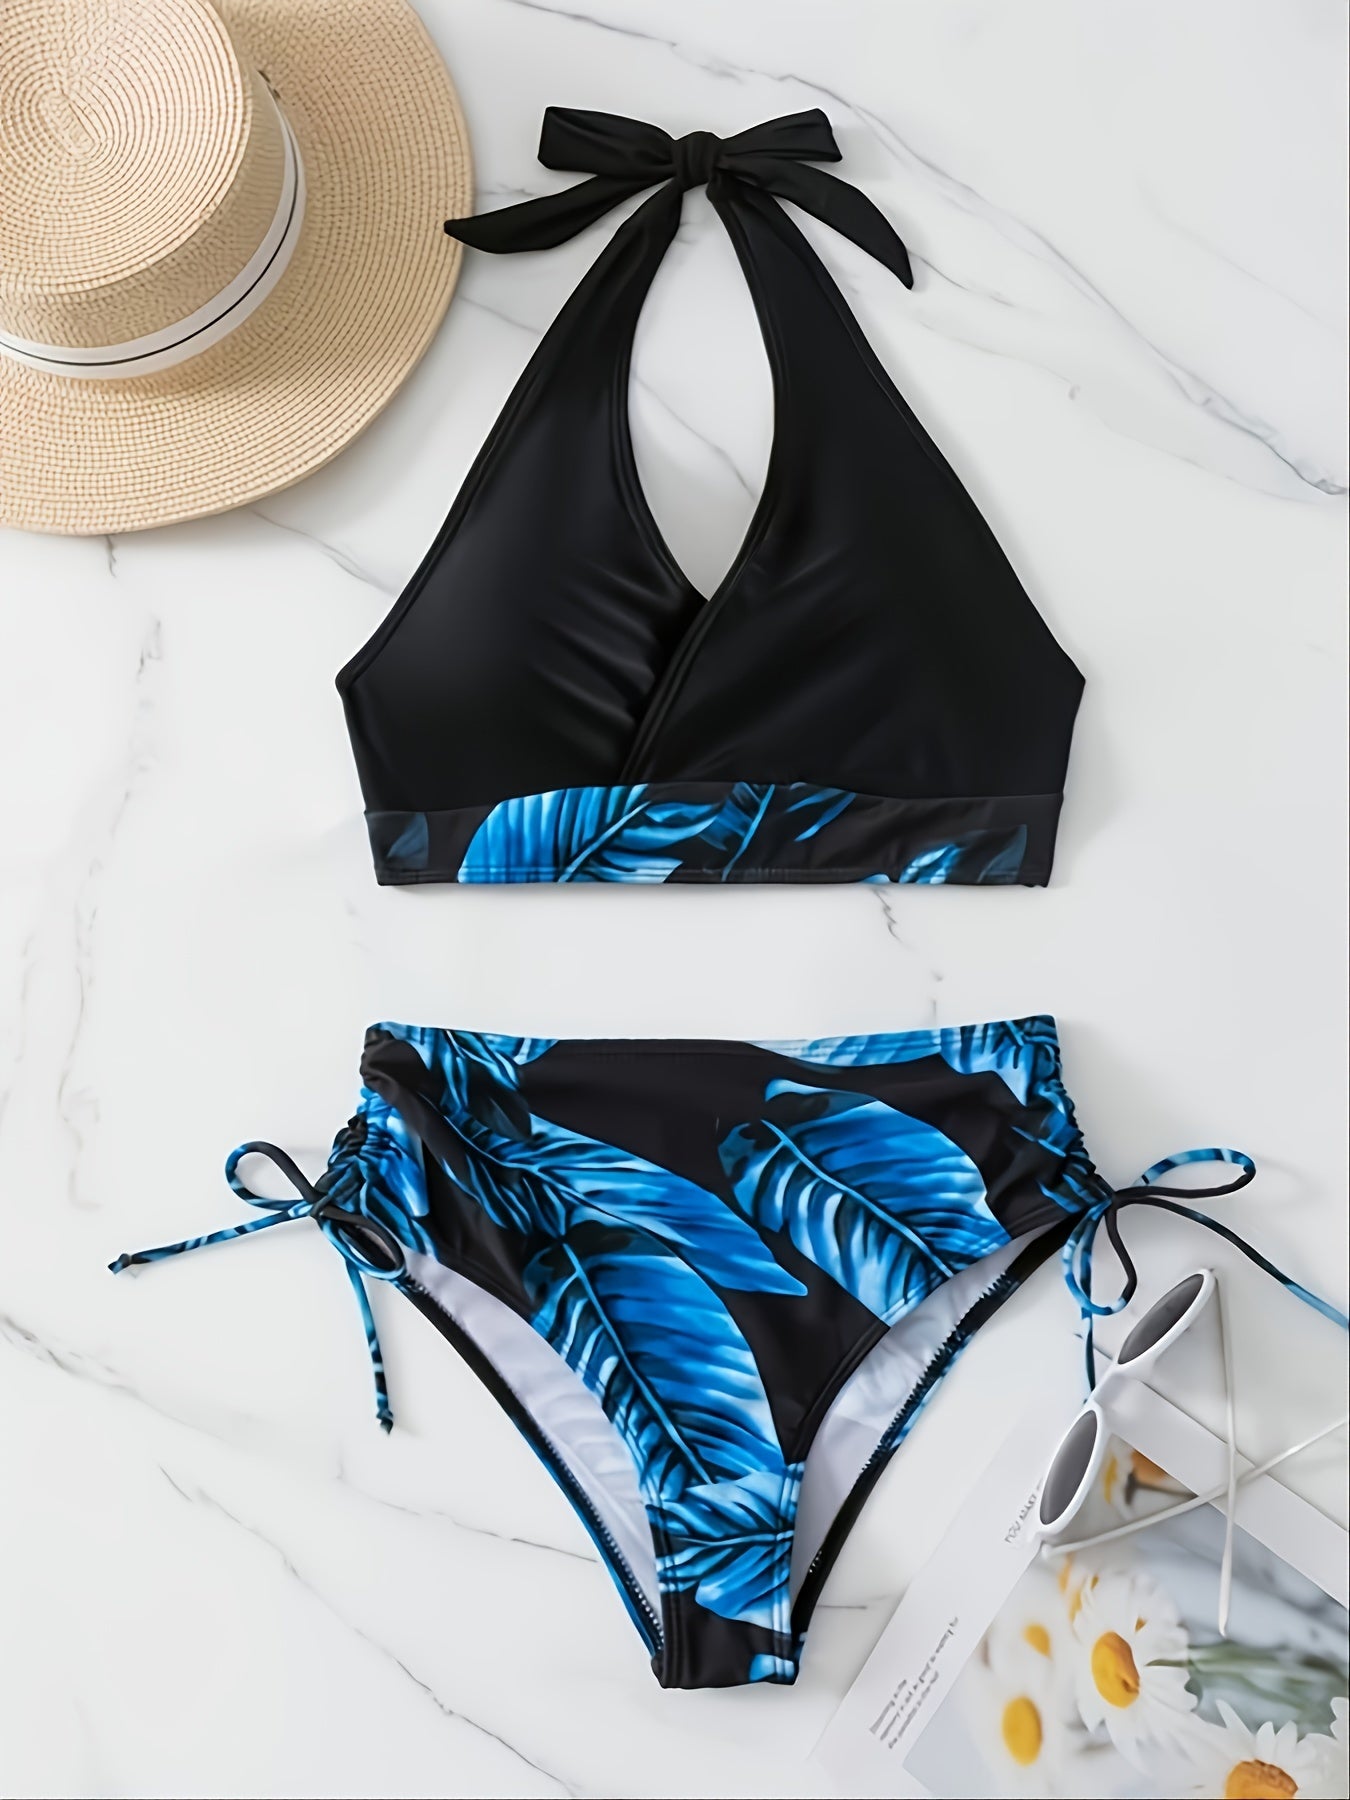 Vzyzv Contrast Leaf Print Halter Neck Bikini Sets, Drawstring Tie Side High Cut Two Piece Swimsuit, Women's Swimwear & Clothing